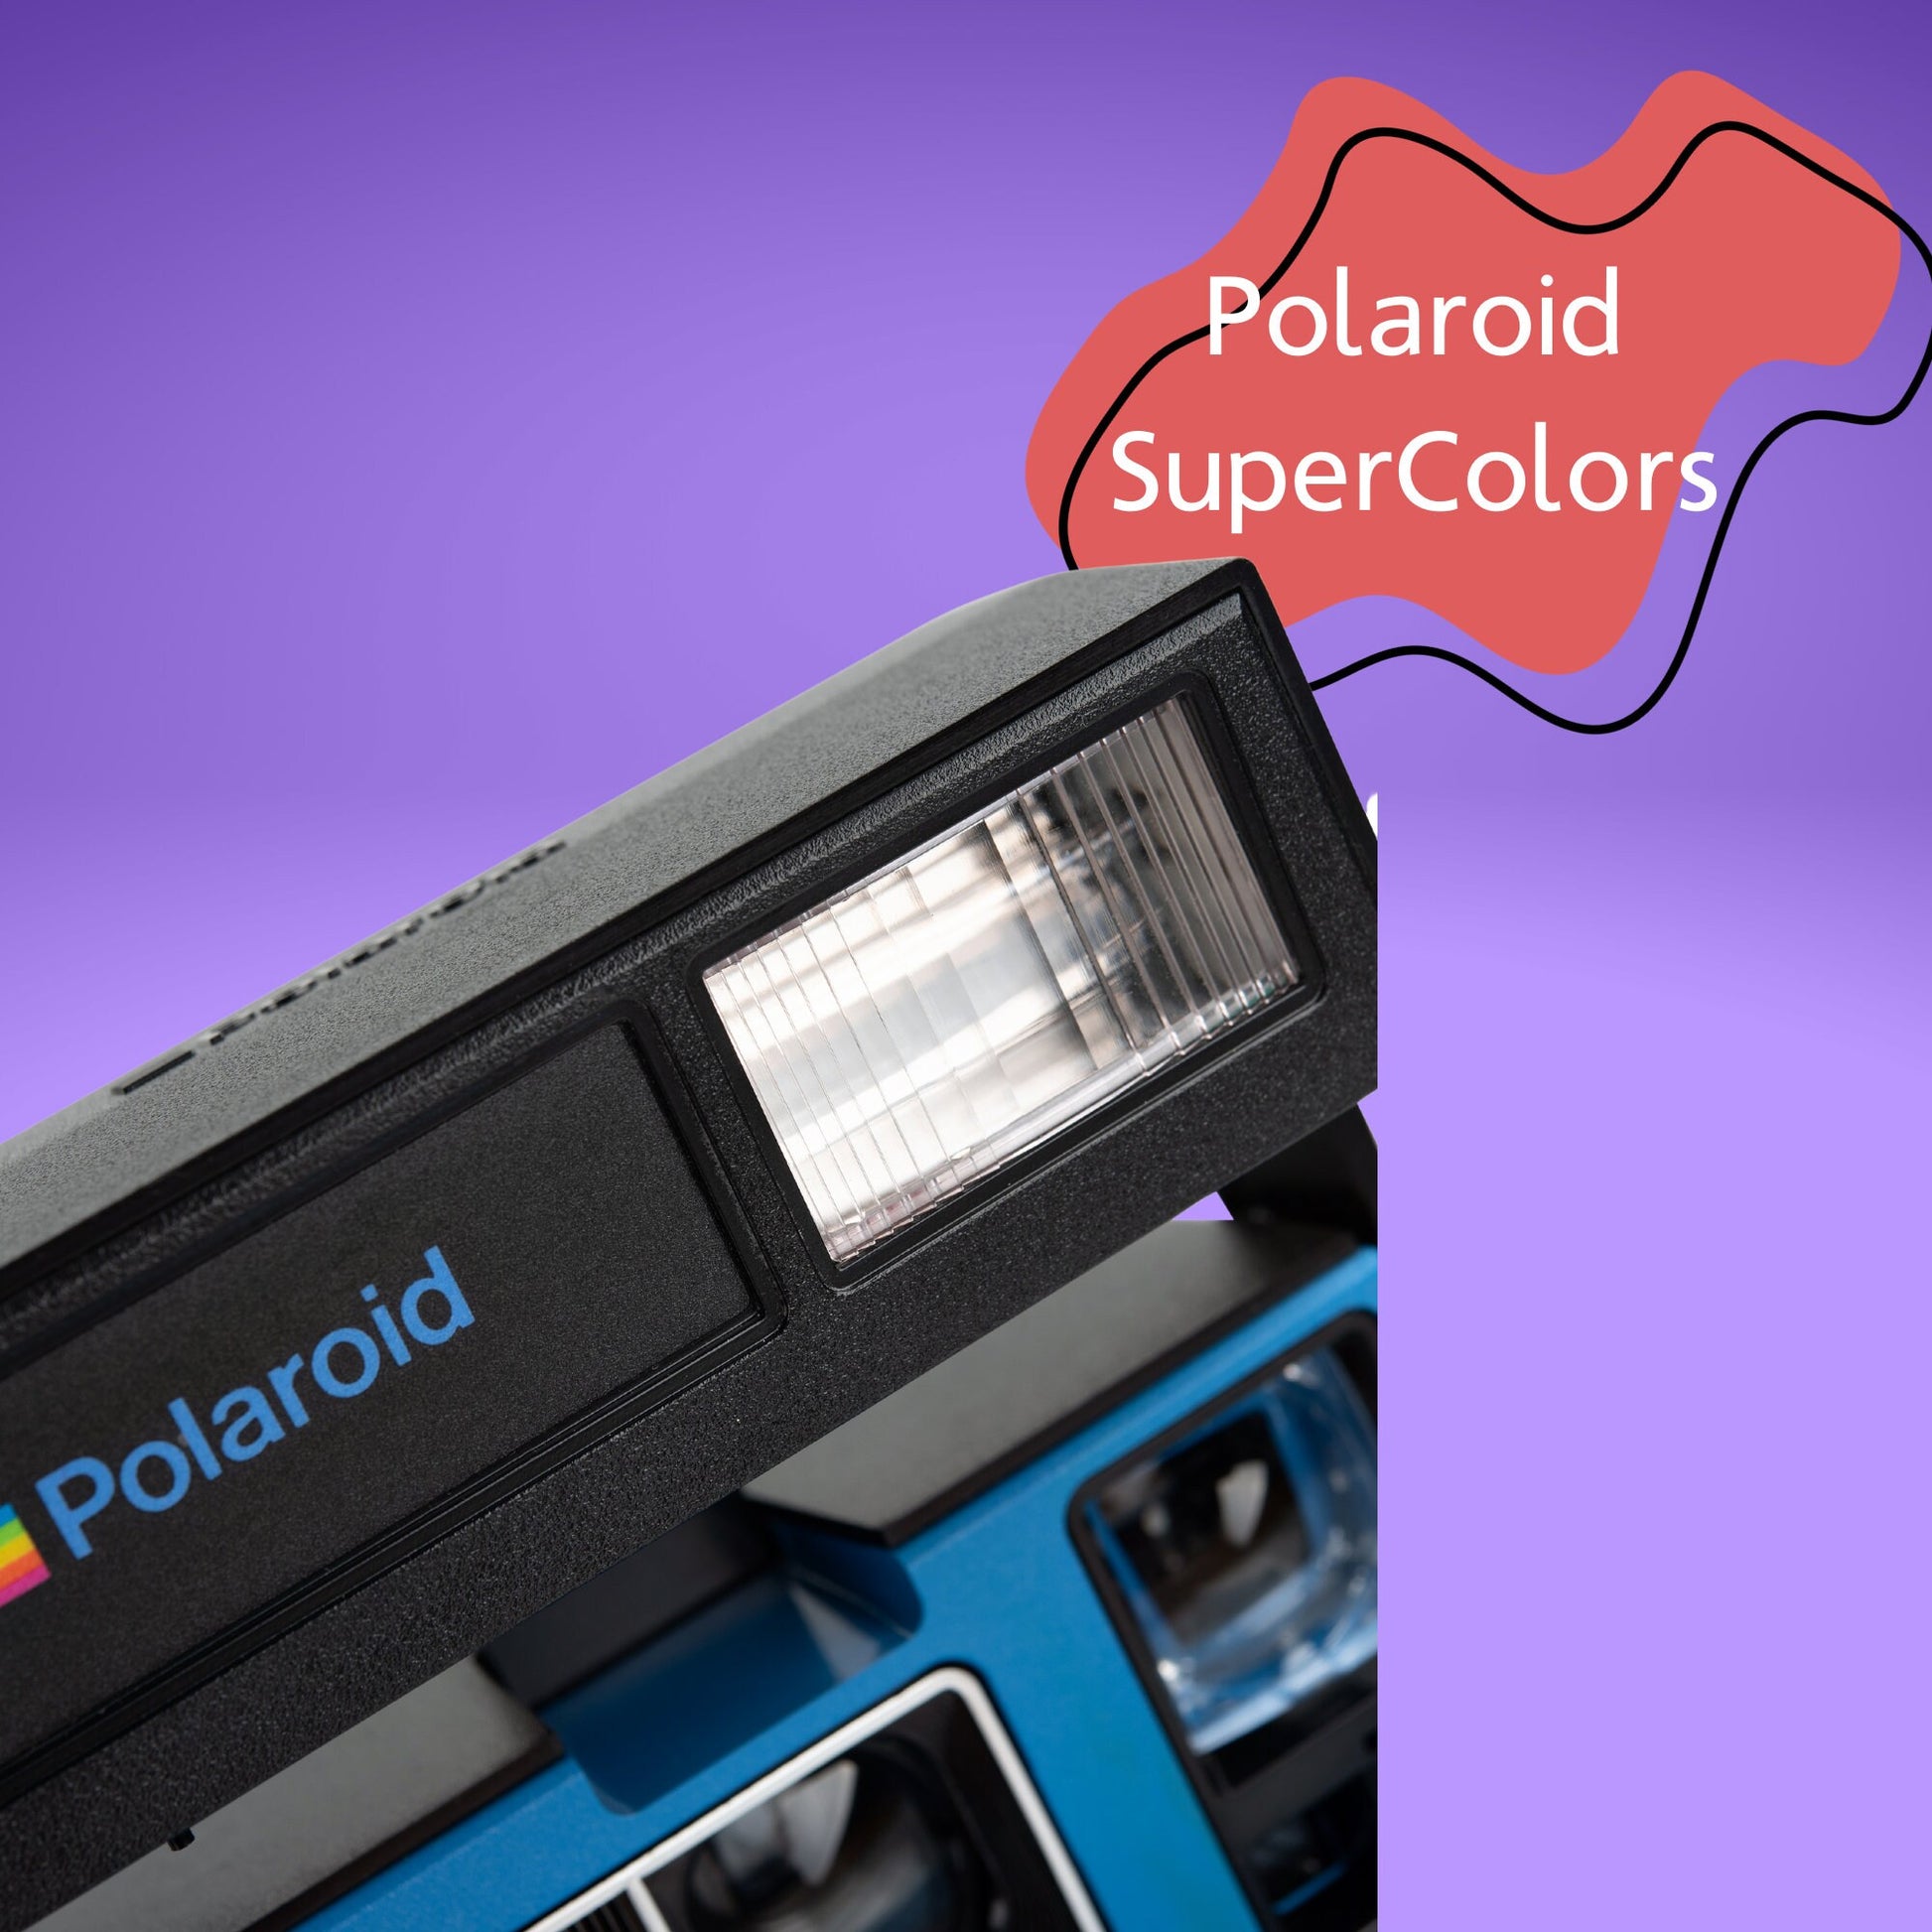 Vintage Polaroid Camera, Old Instant Camera, Pefect Instant Camera for Beginner - Vintage Polaroid Instant Cameras